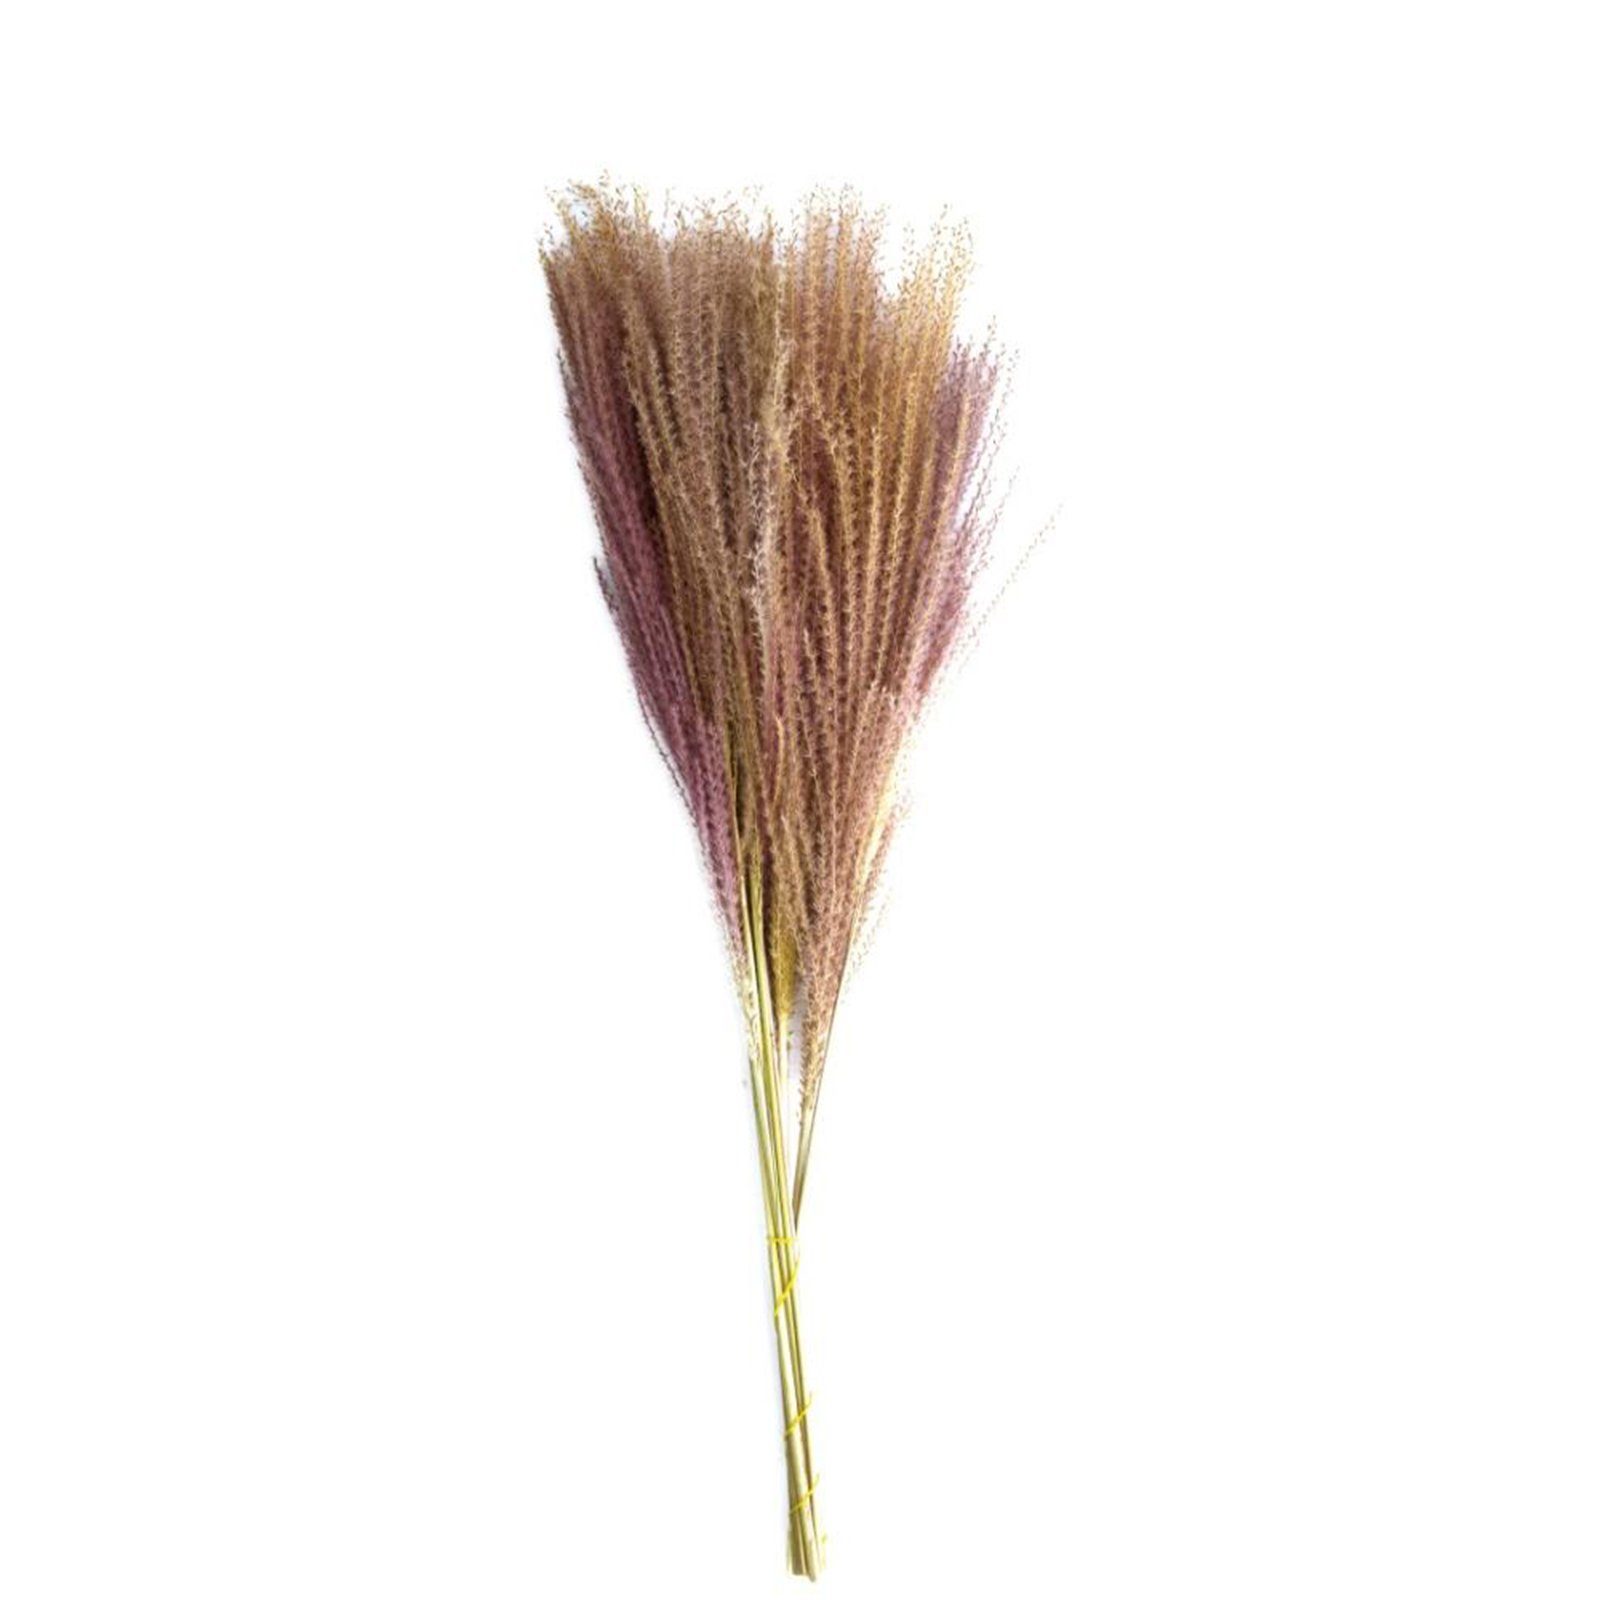 Trockenblume Chinaschilf lila - Miscanthus - 75 cm - 10 Stück, DIJK | Trockenblumen